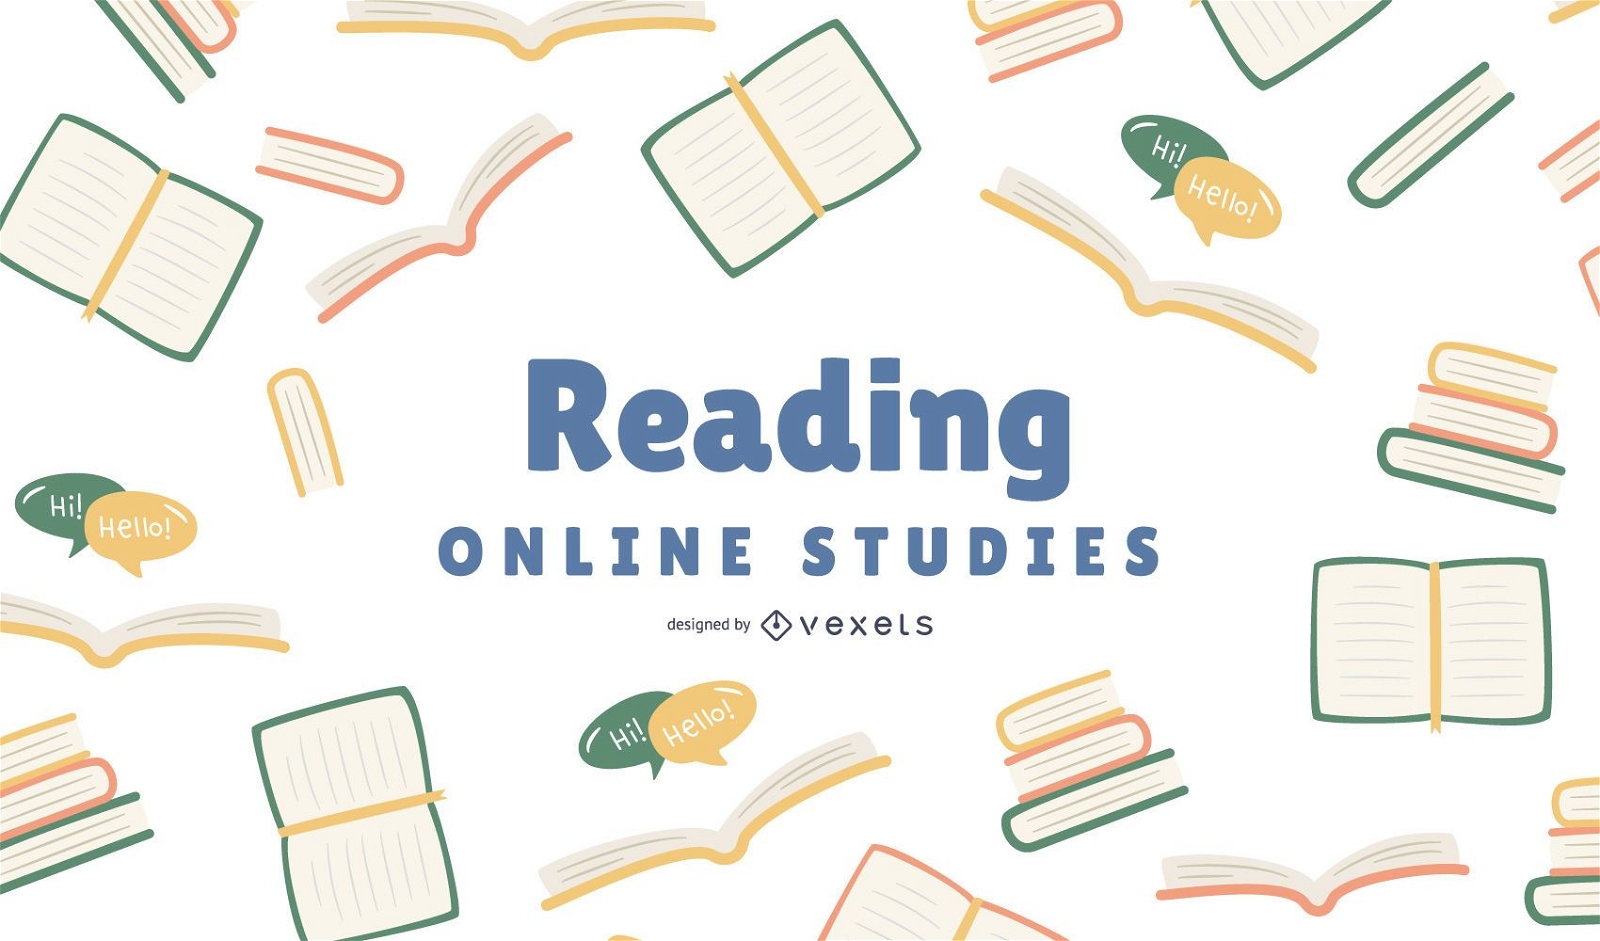 Reading Online Studies Cover Design